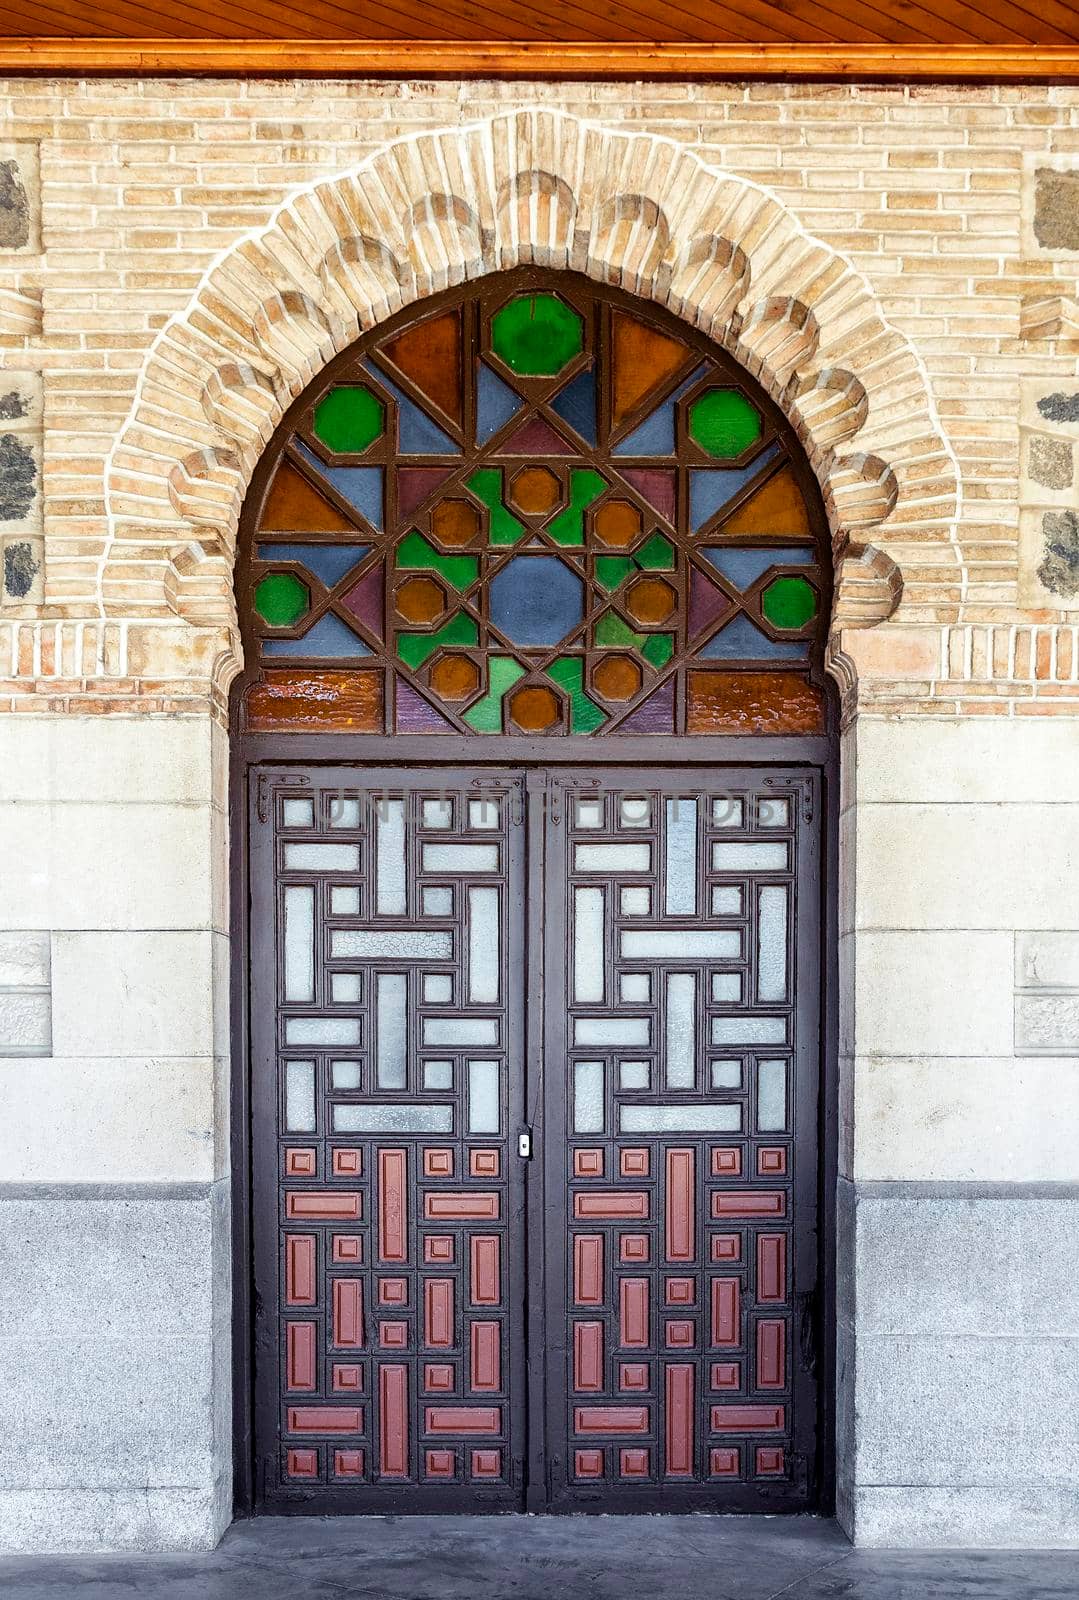 Ornate door in moorish style in Toledo railway station by Goodday